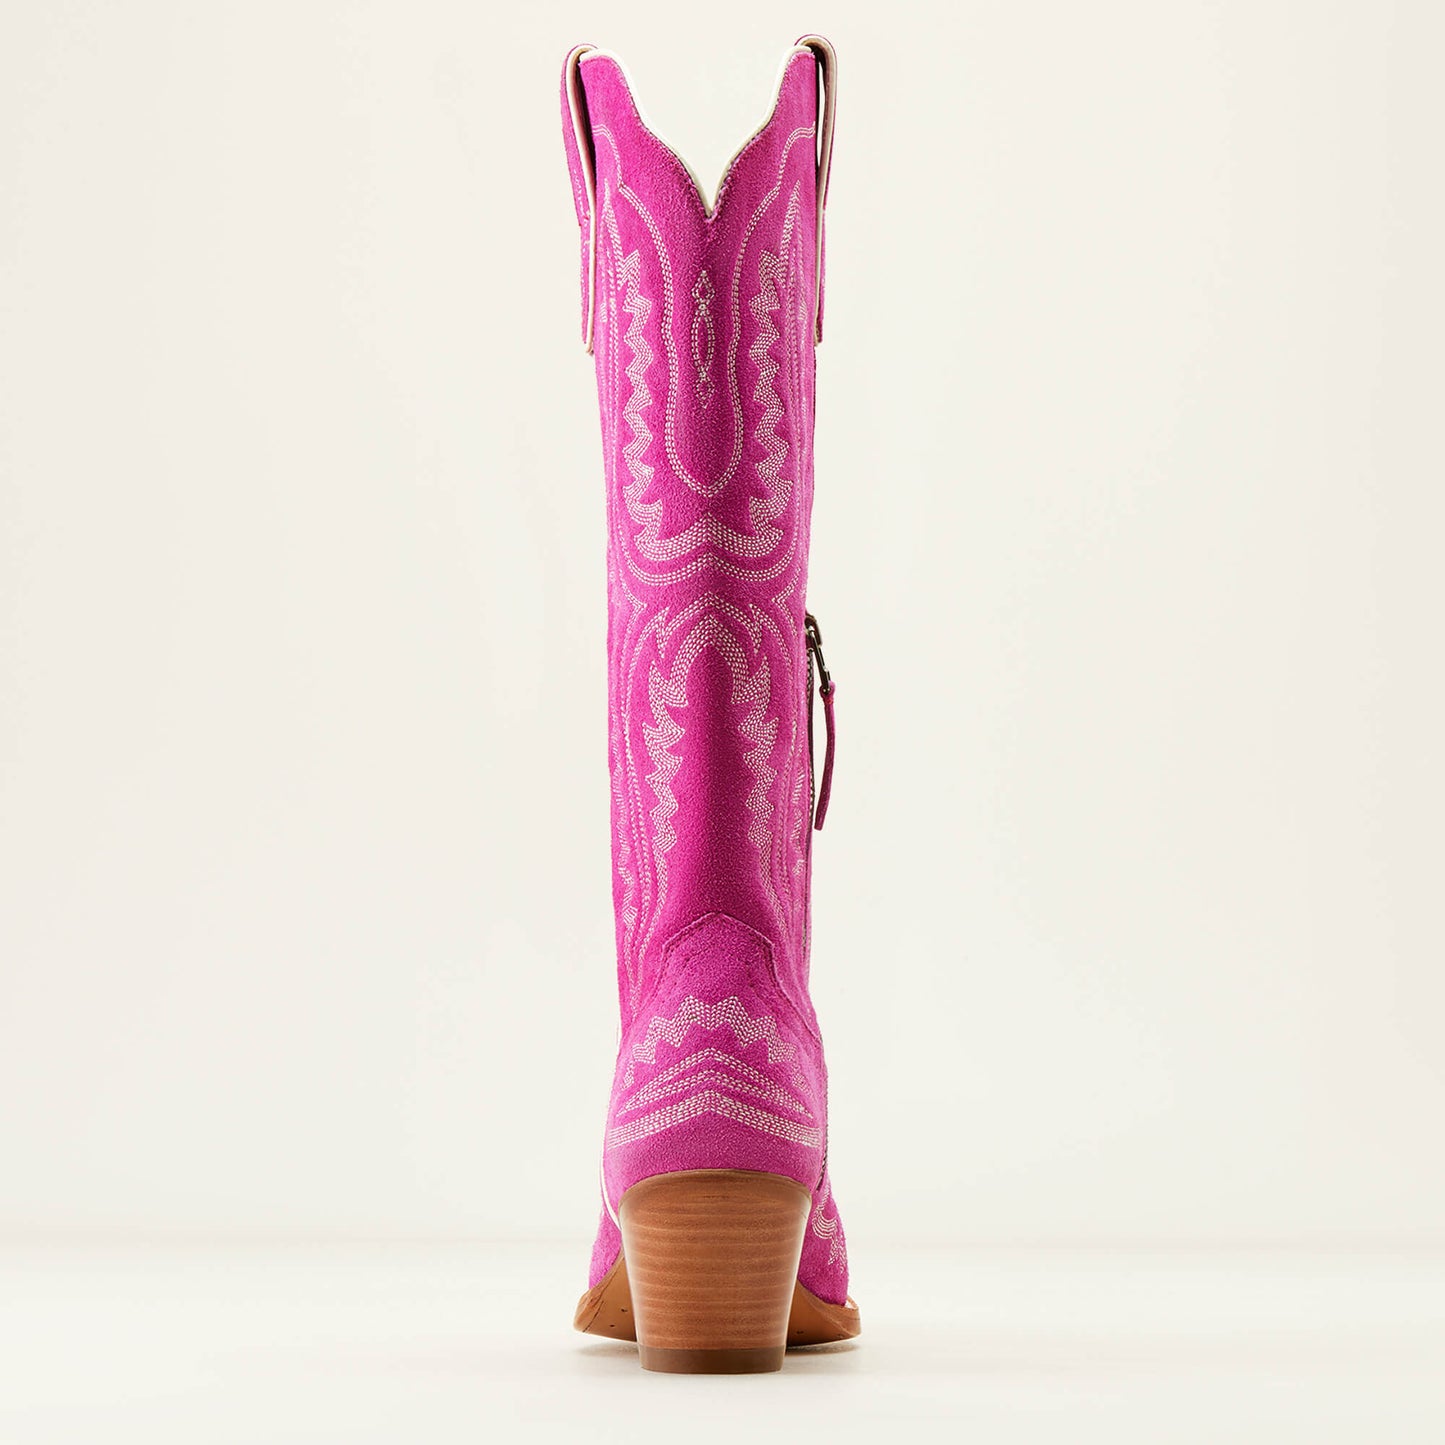 The Ariat Casanova Western Boot